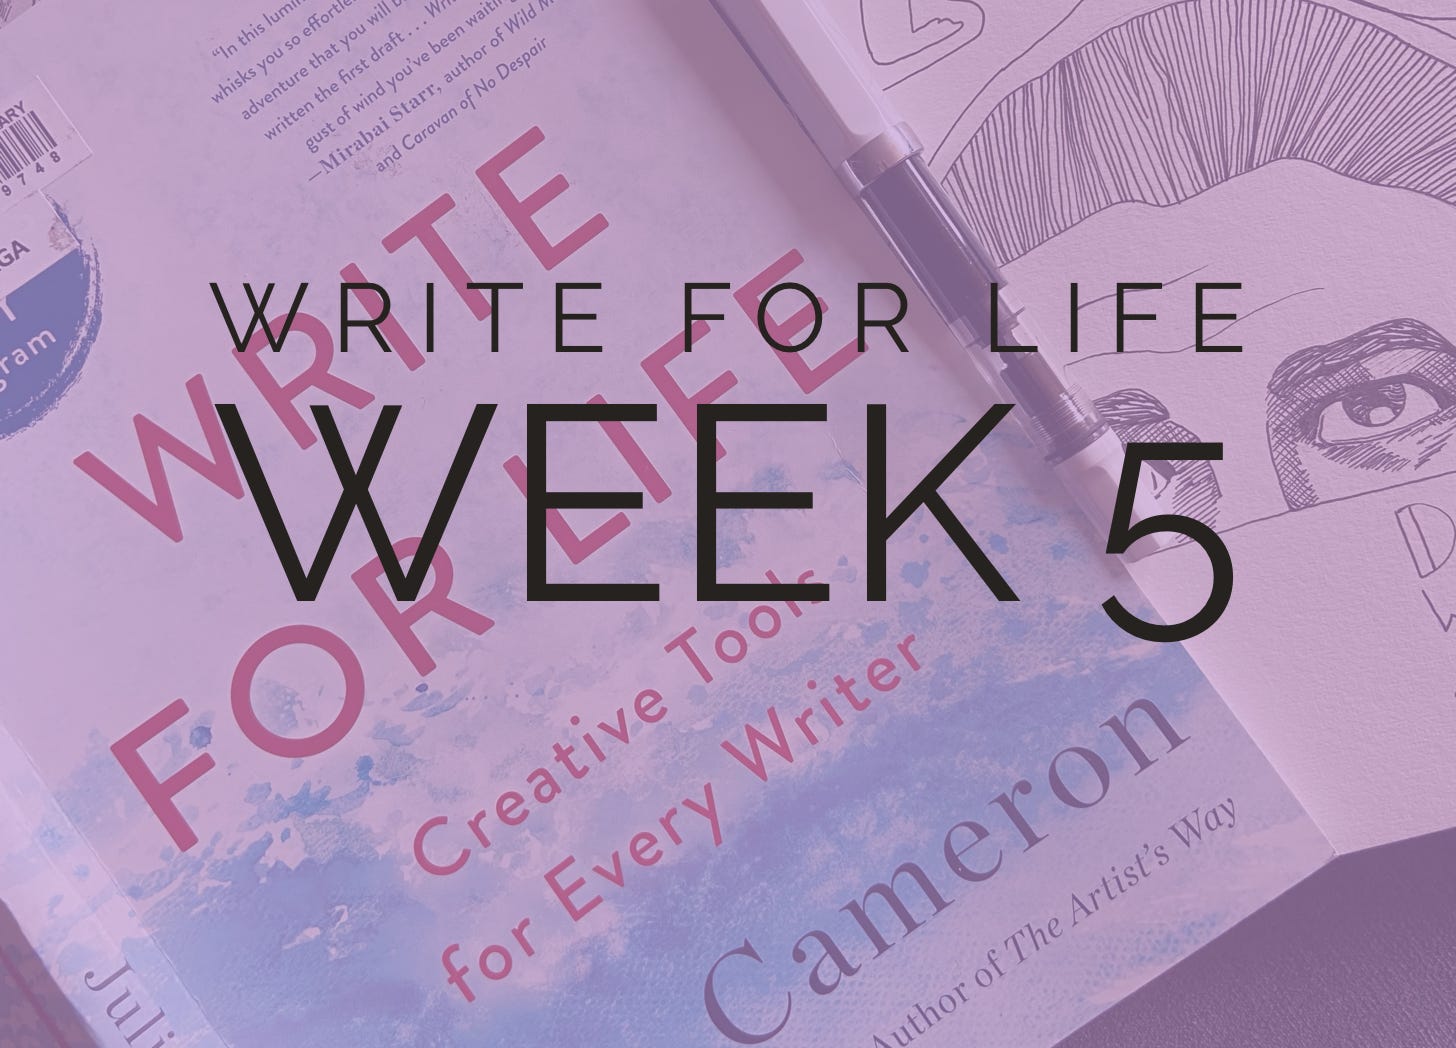 Julia Cameron's Write for Life Week 5